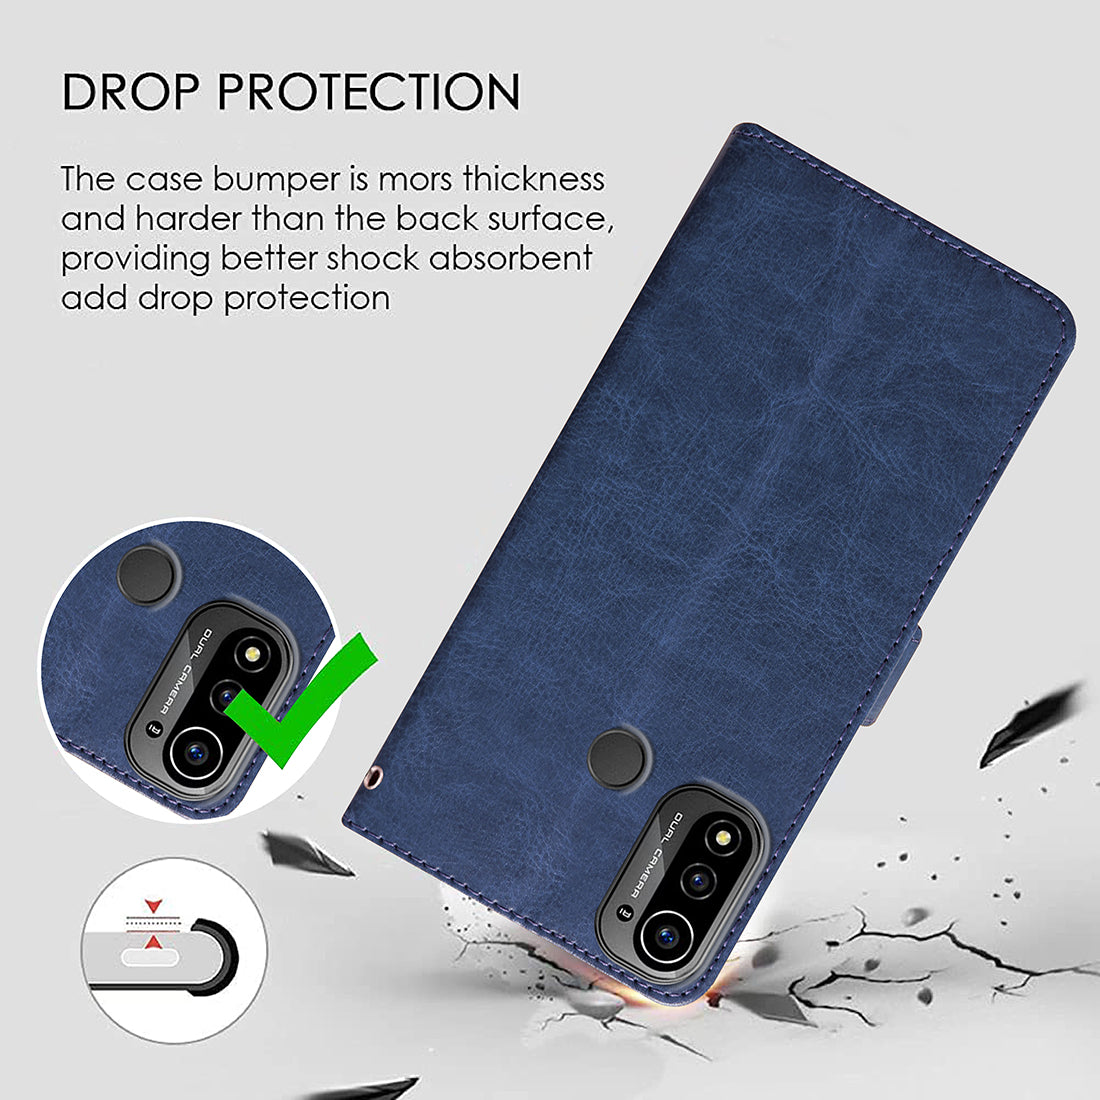 Premium Wallet Flip Cover for Lava X3 4G